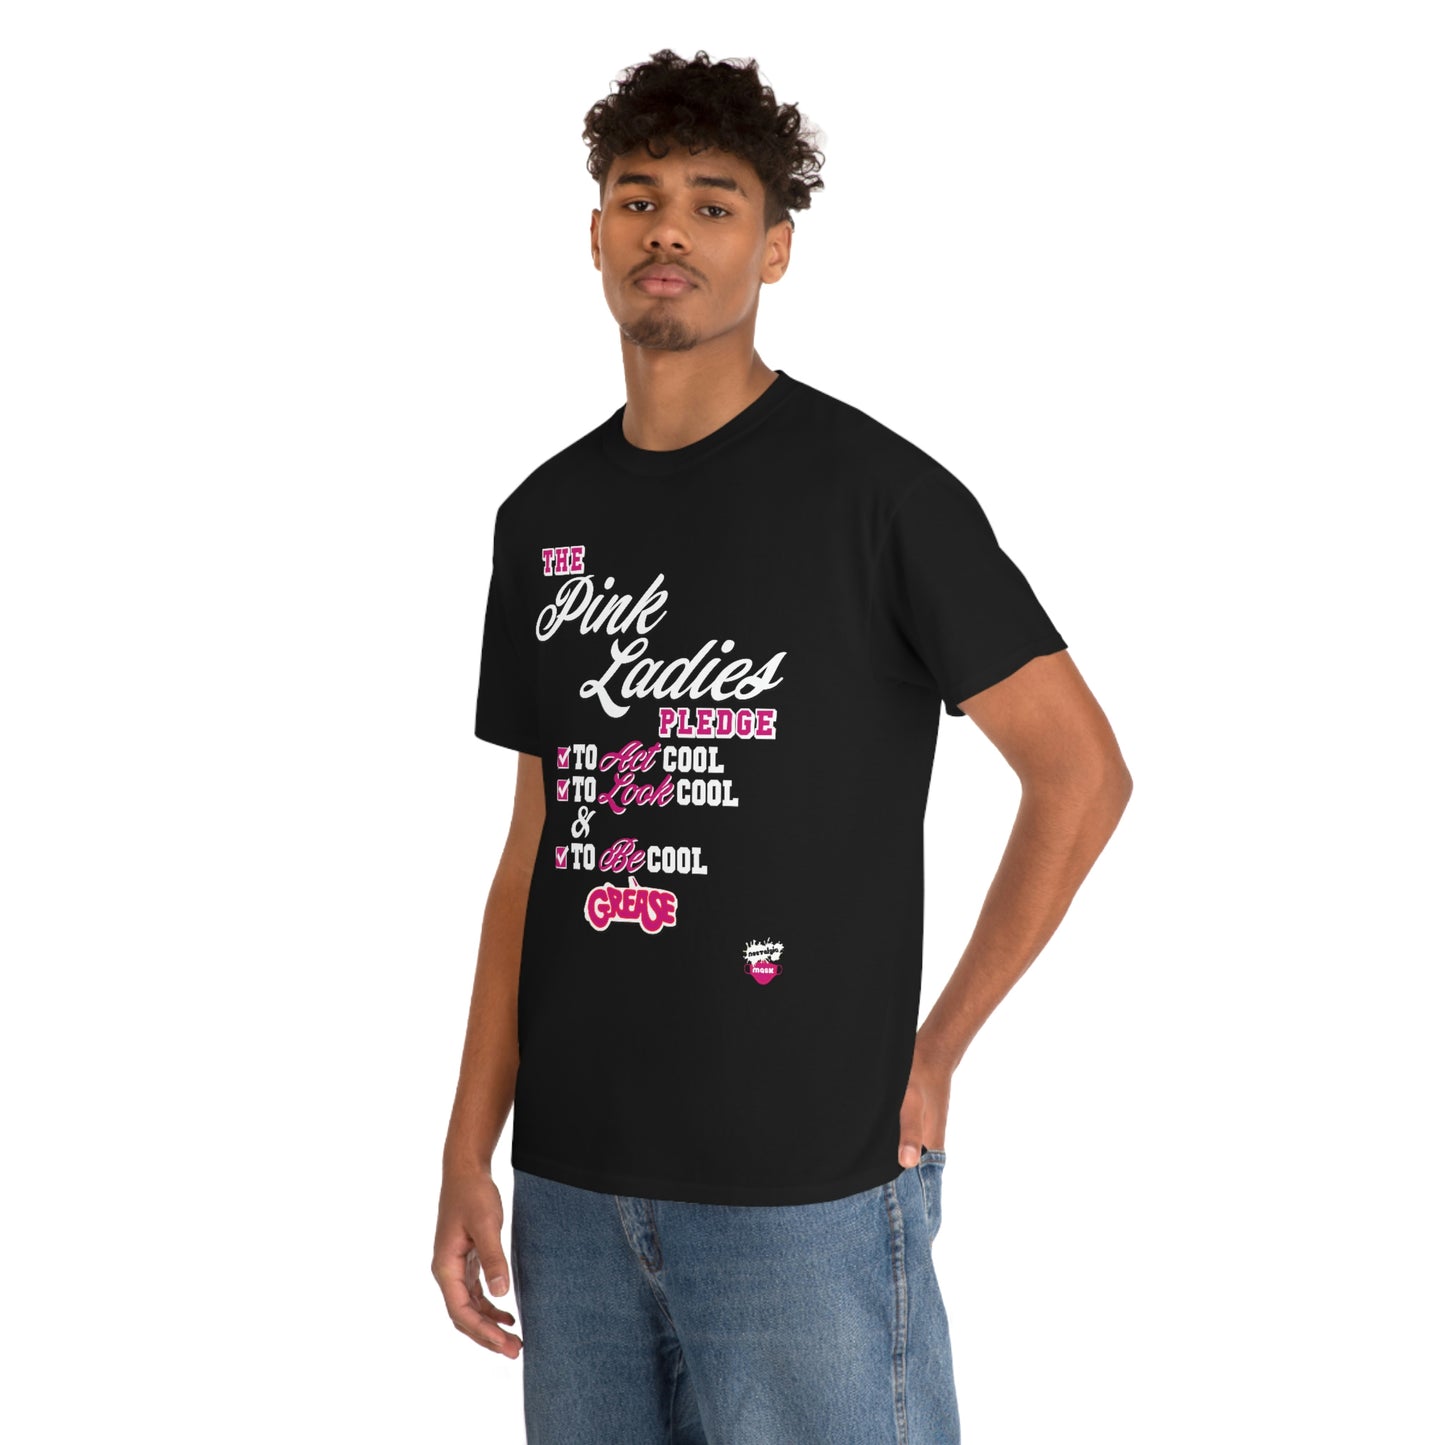 Grease Pink Ladies Pledge T-Shirt